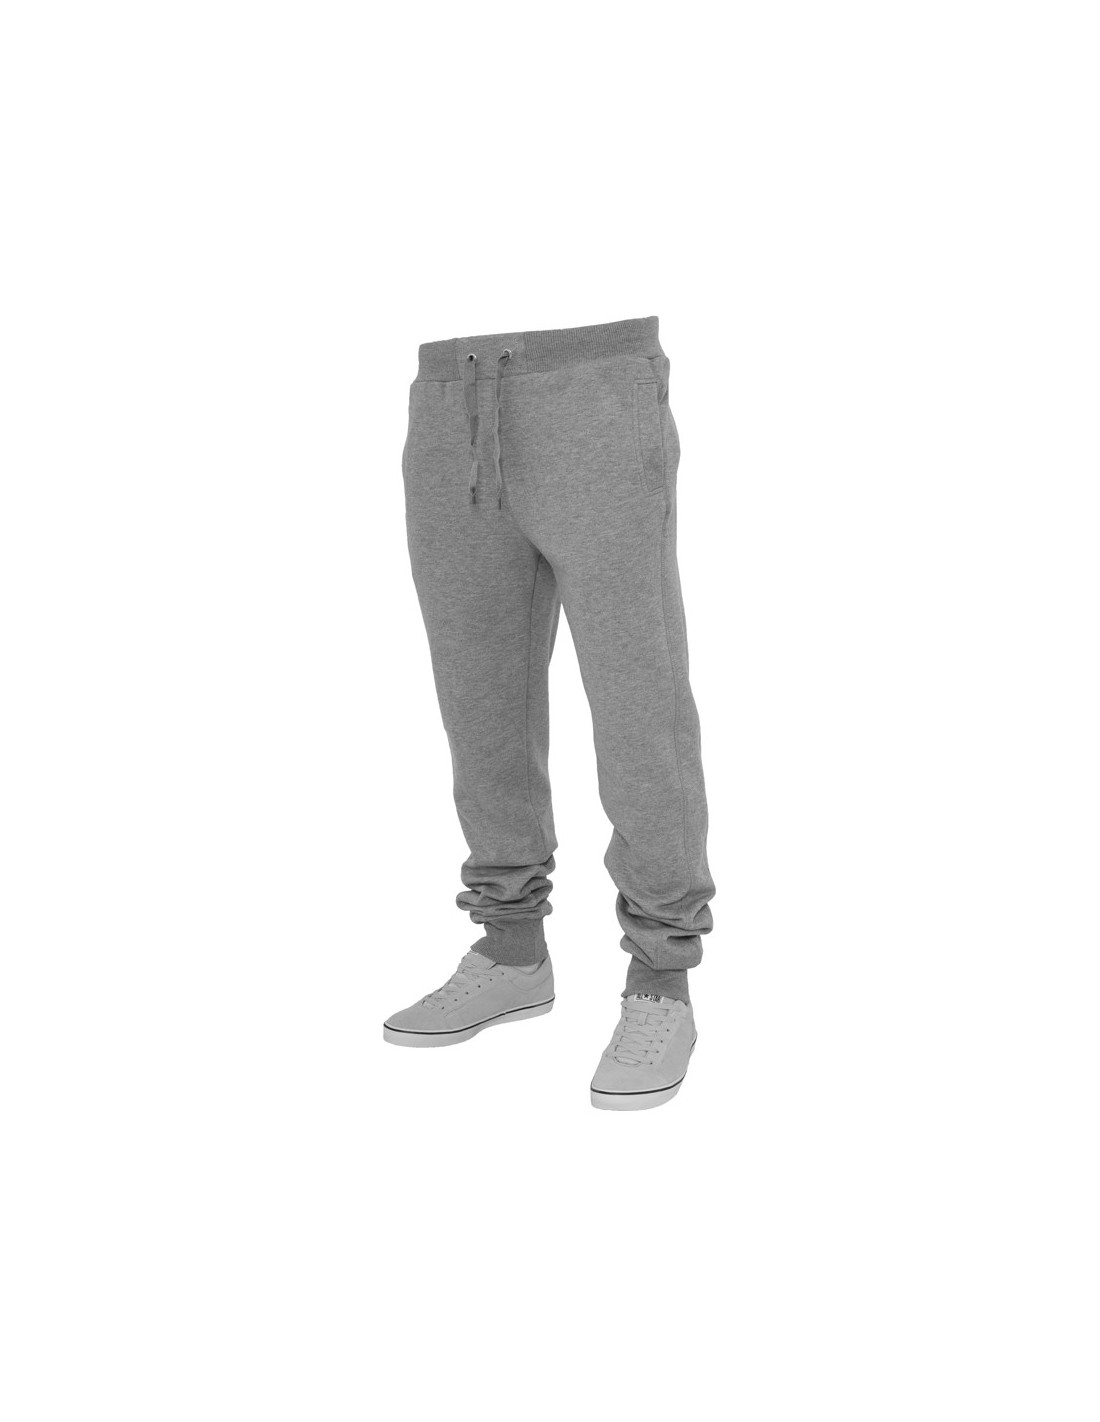 Urban Straight Fit Sweatpants grey